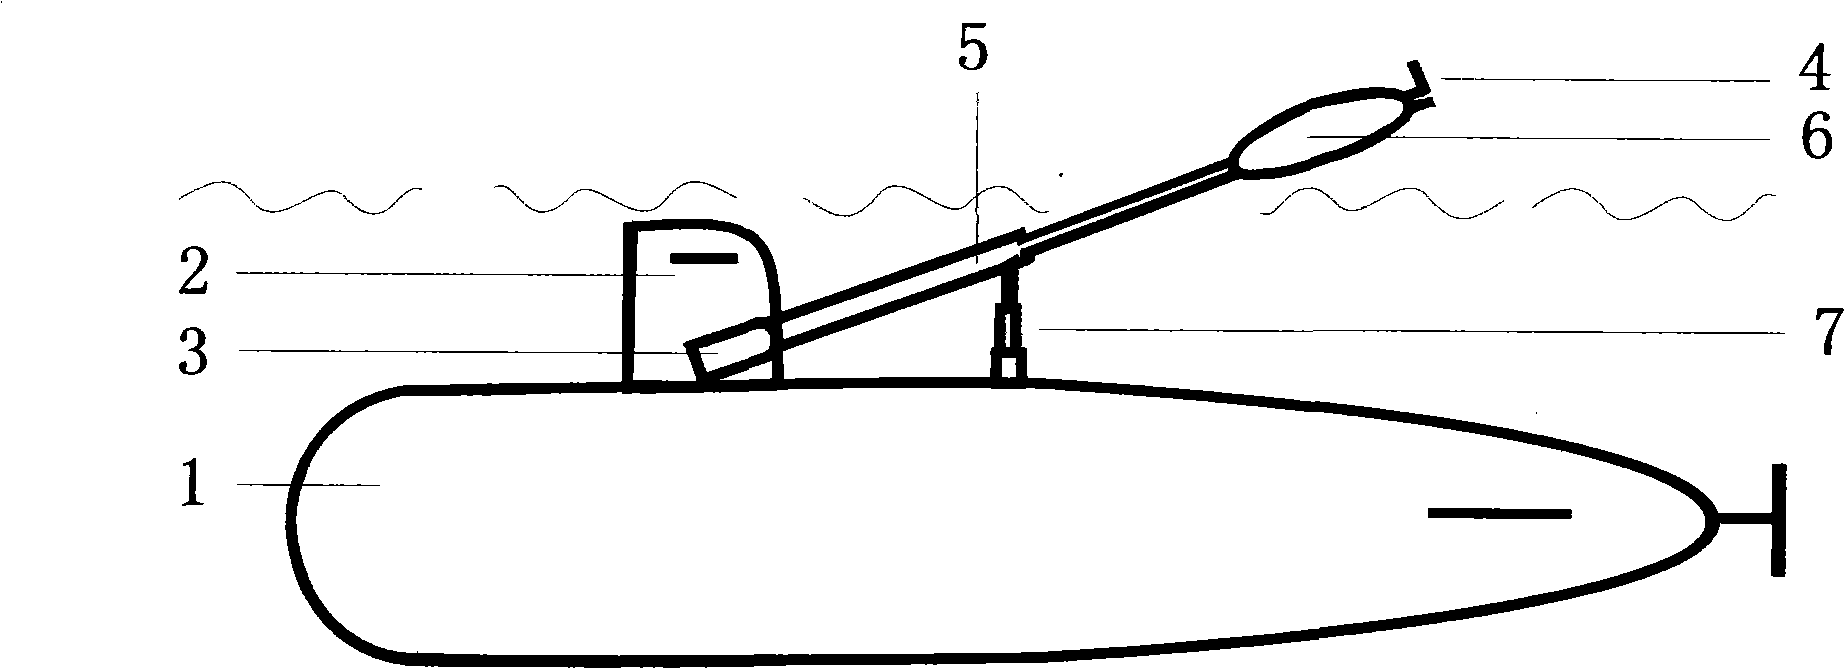 Submersible gunboat